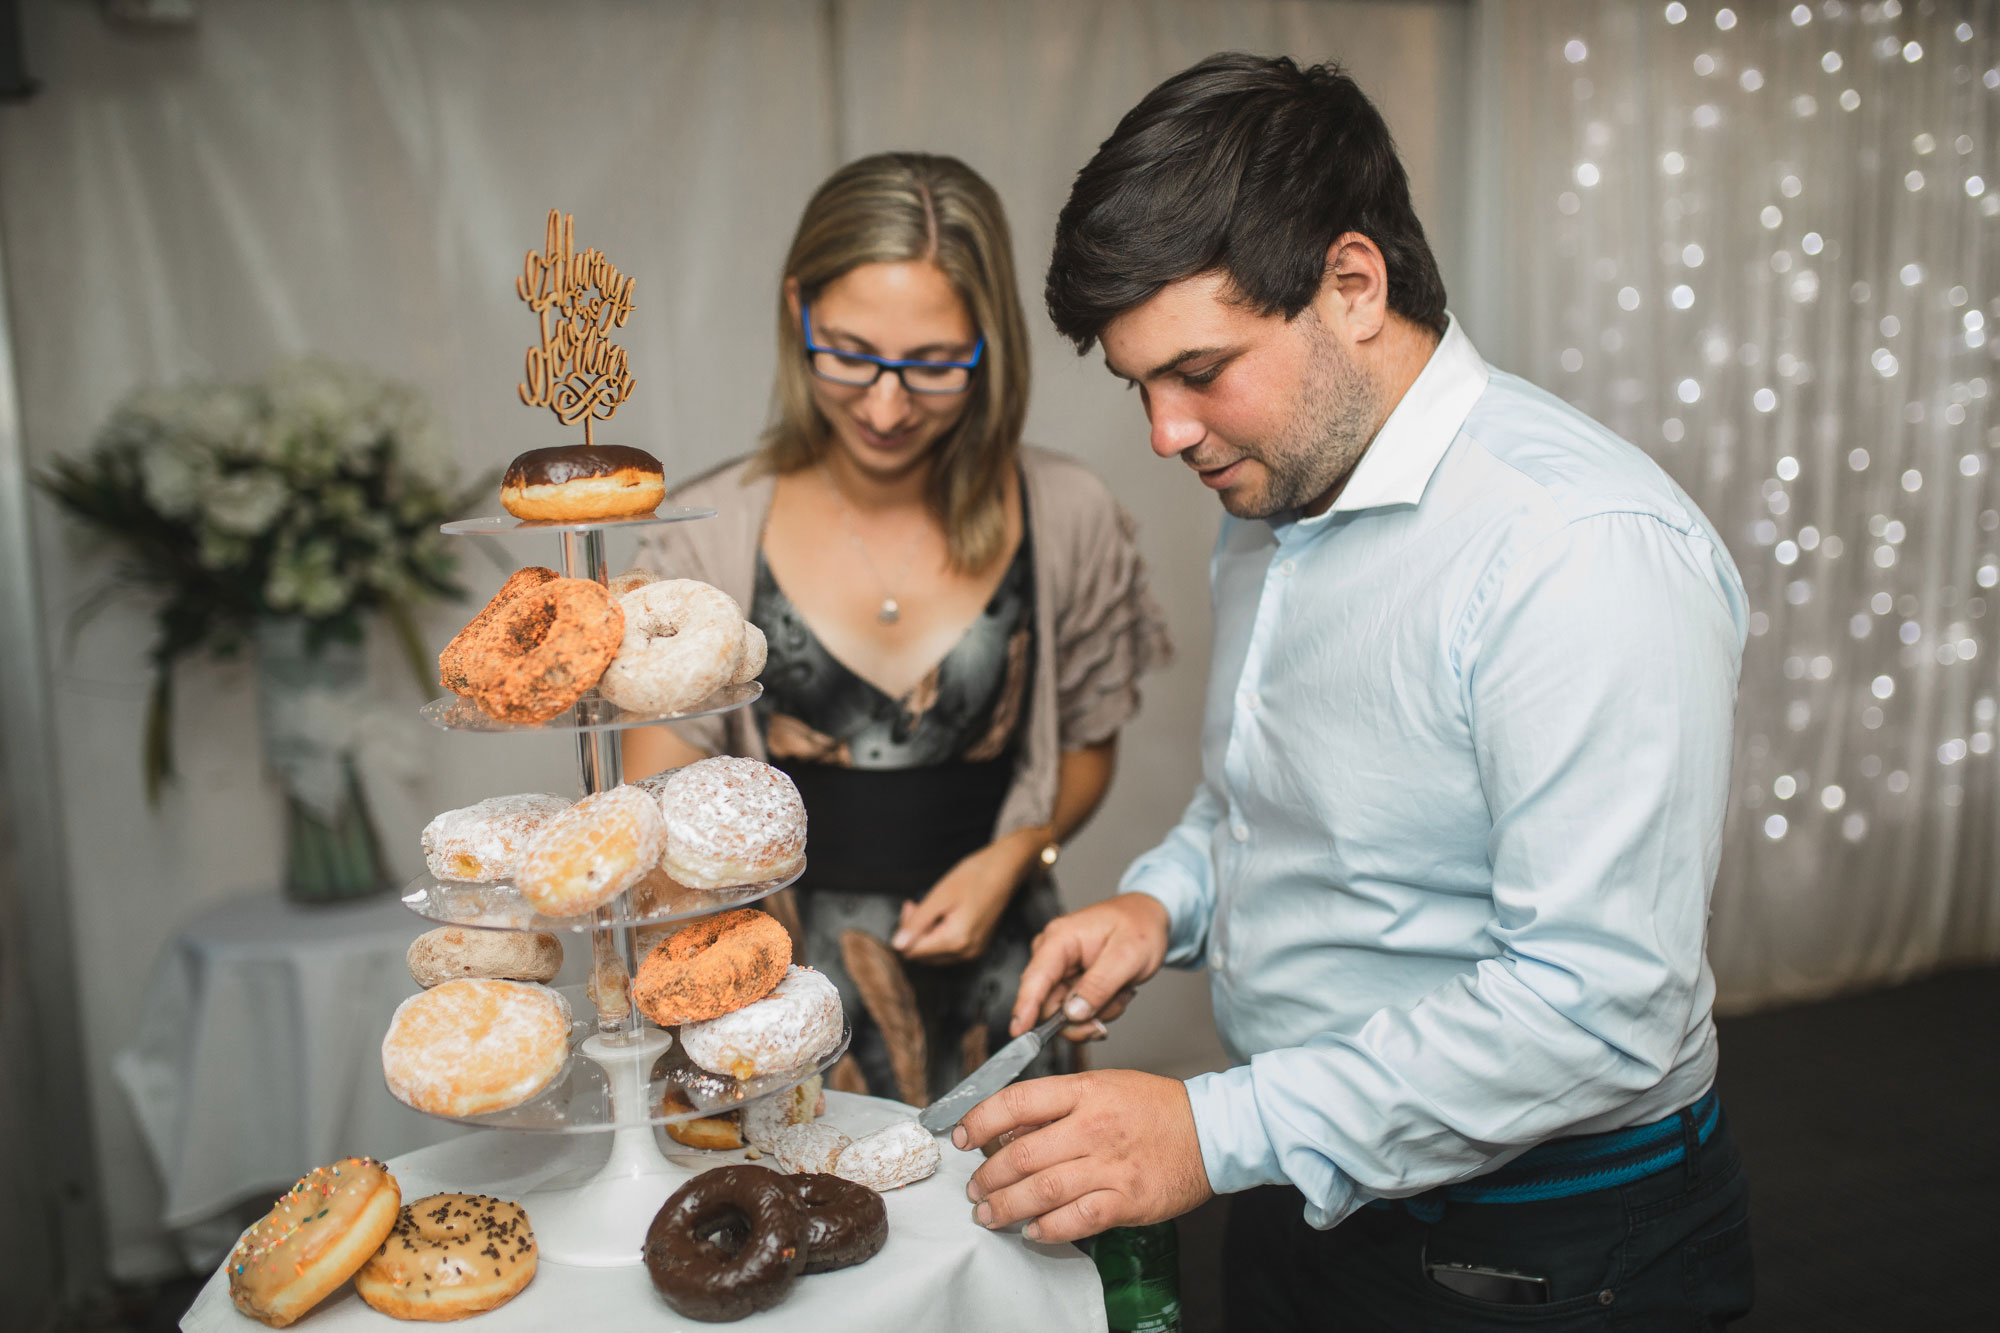 auckland tawharanui lodge wedding guests choosing donuts